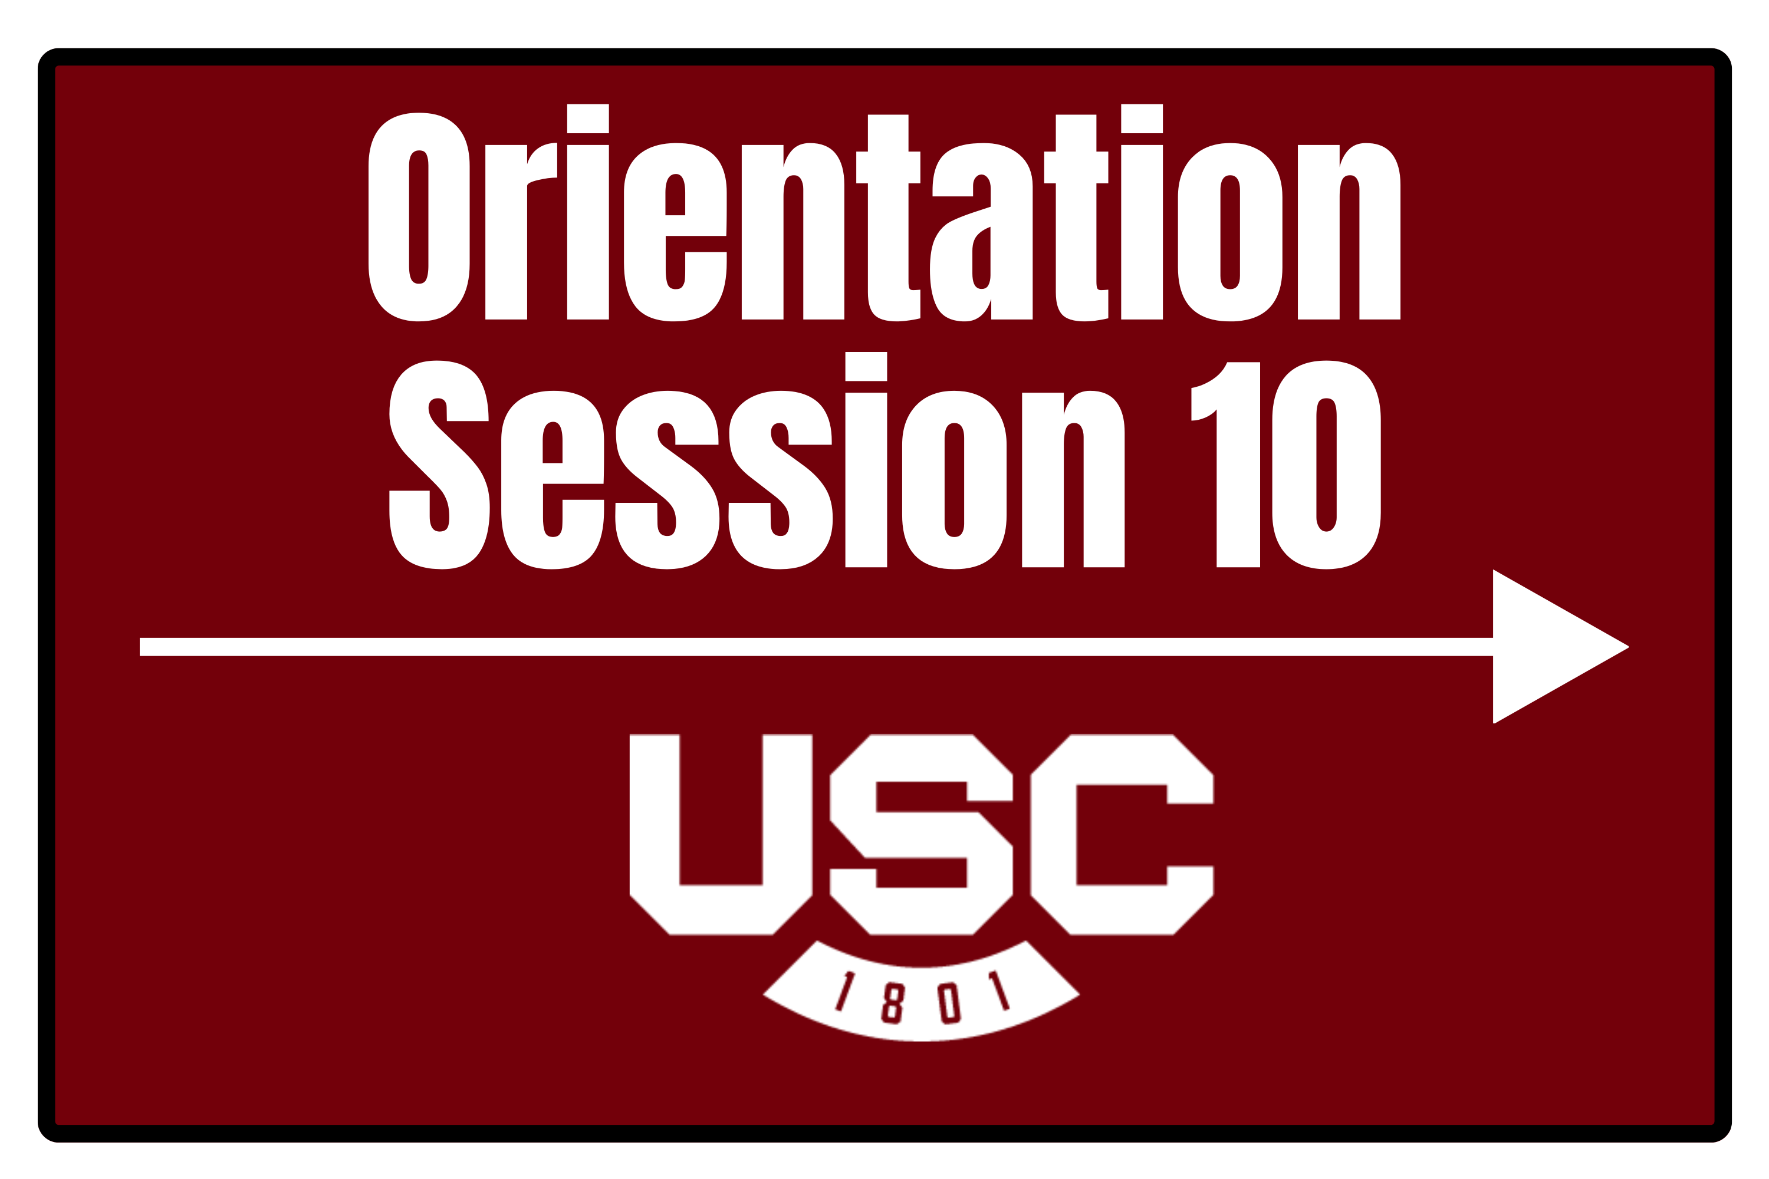 Orientation Session 10: June 26 - 27